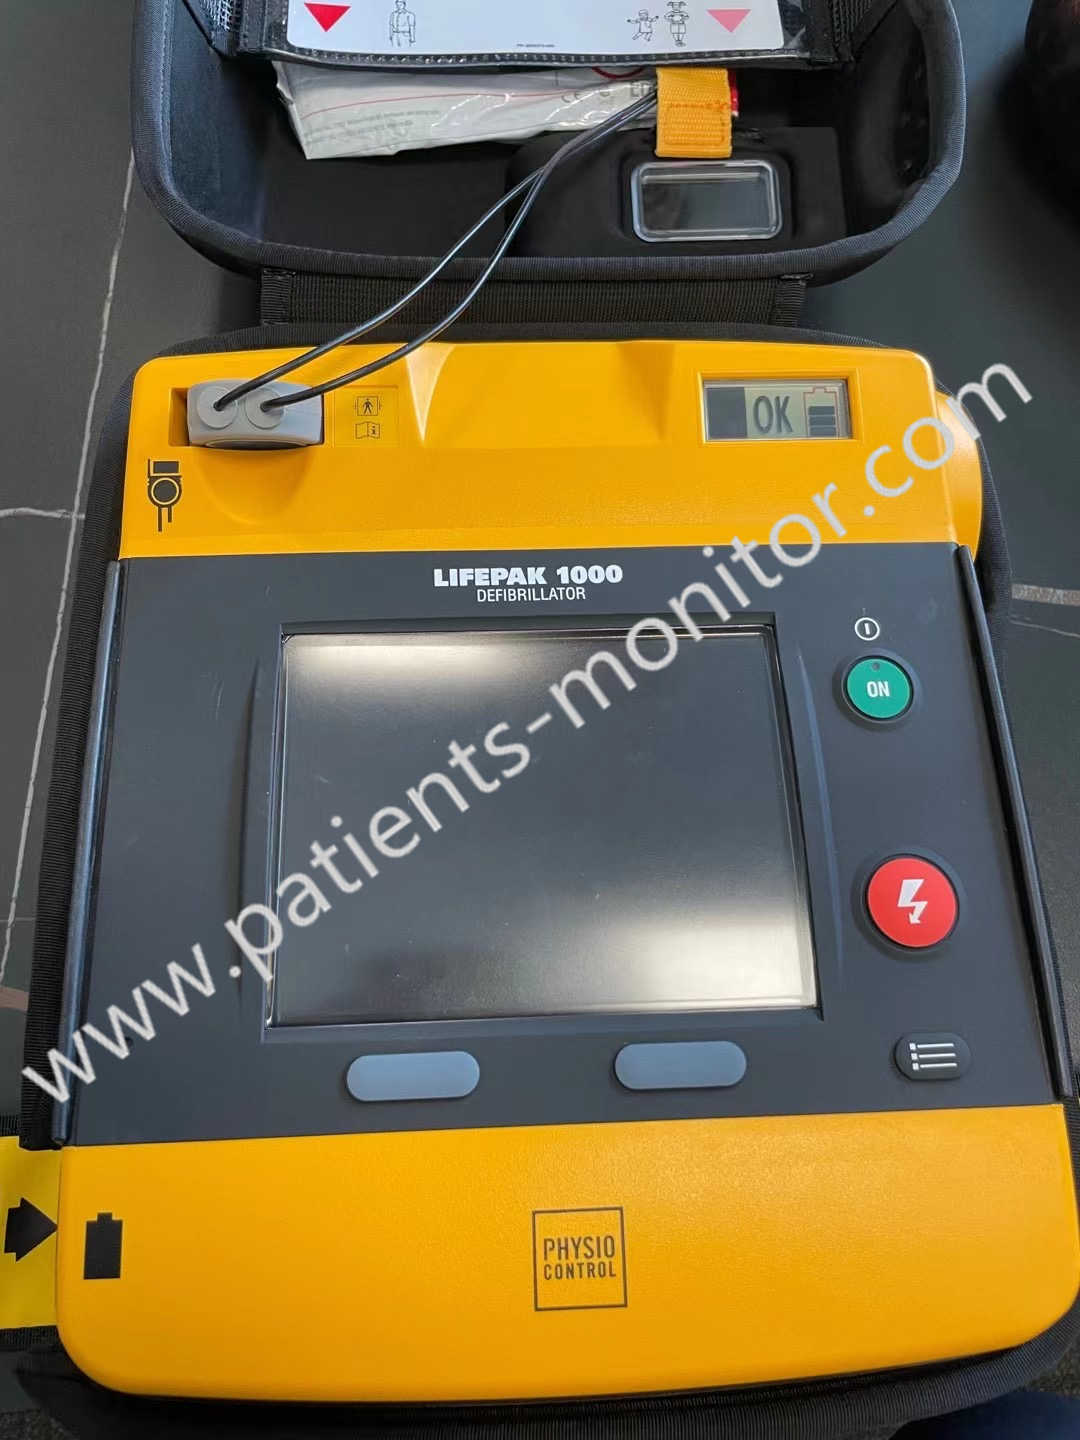 PHYSIO CONTROL Medtronic LIFEPAK 1000 Defibrillator Used - Good Medical Equipment